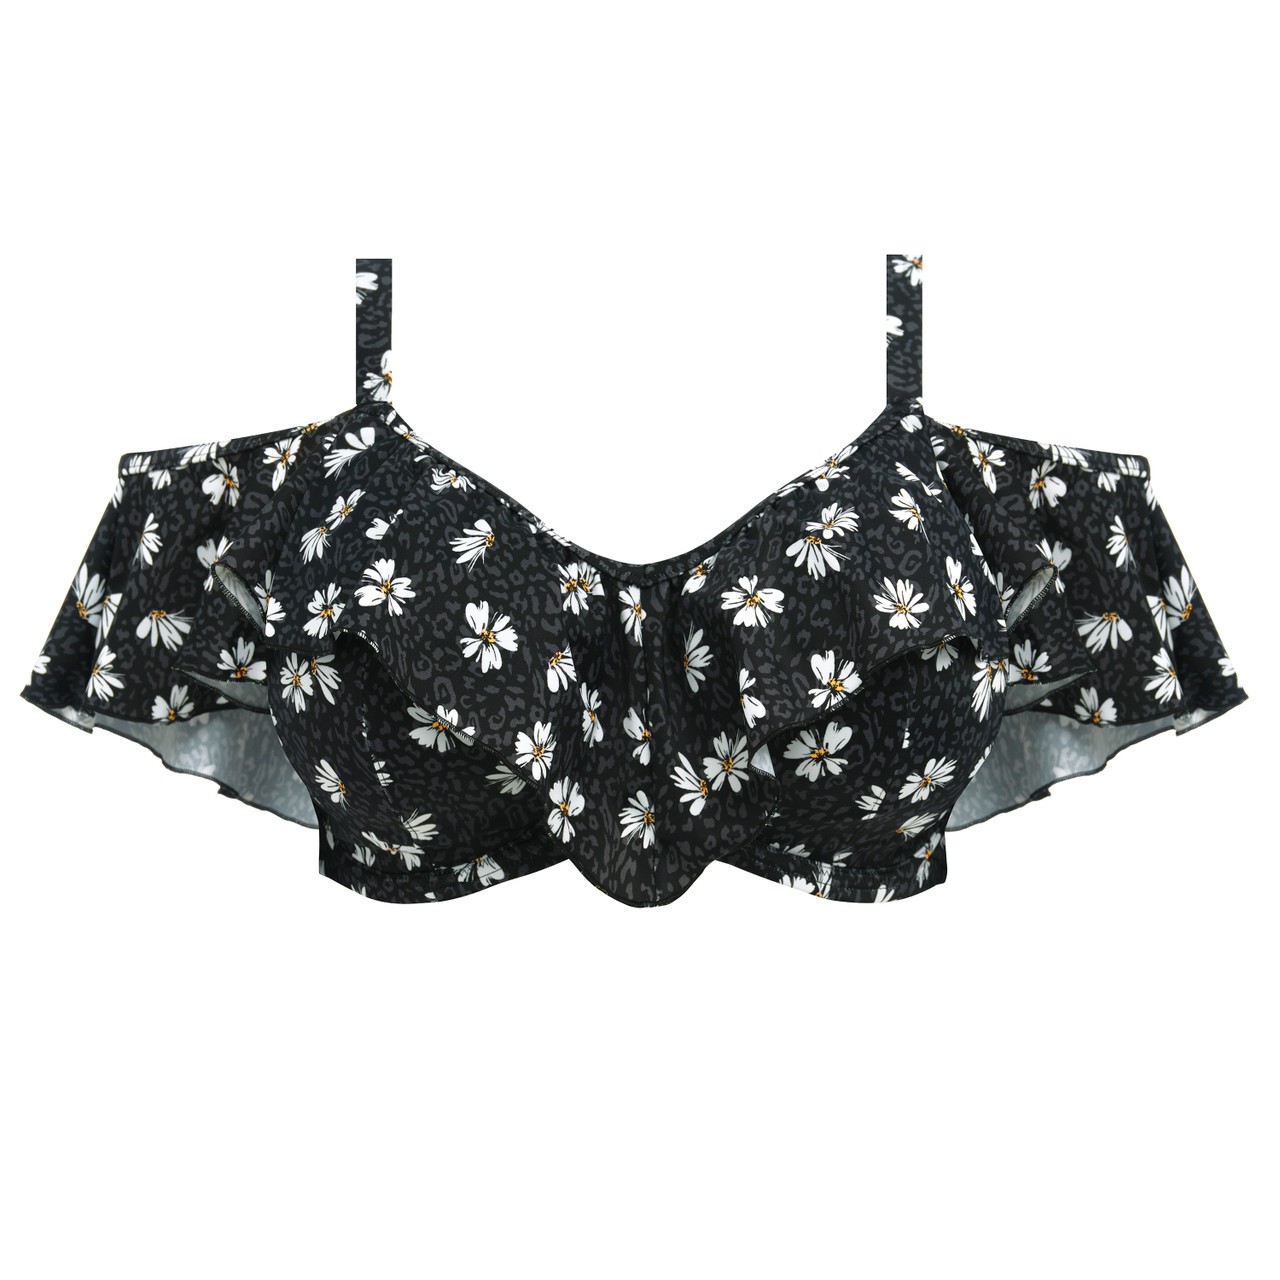 Elomi Plain Sailing Bikini Brief Swim Bottom in Black Daisy (BDY) - Busted  Bra Shop